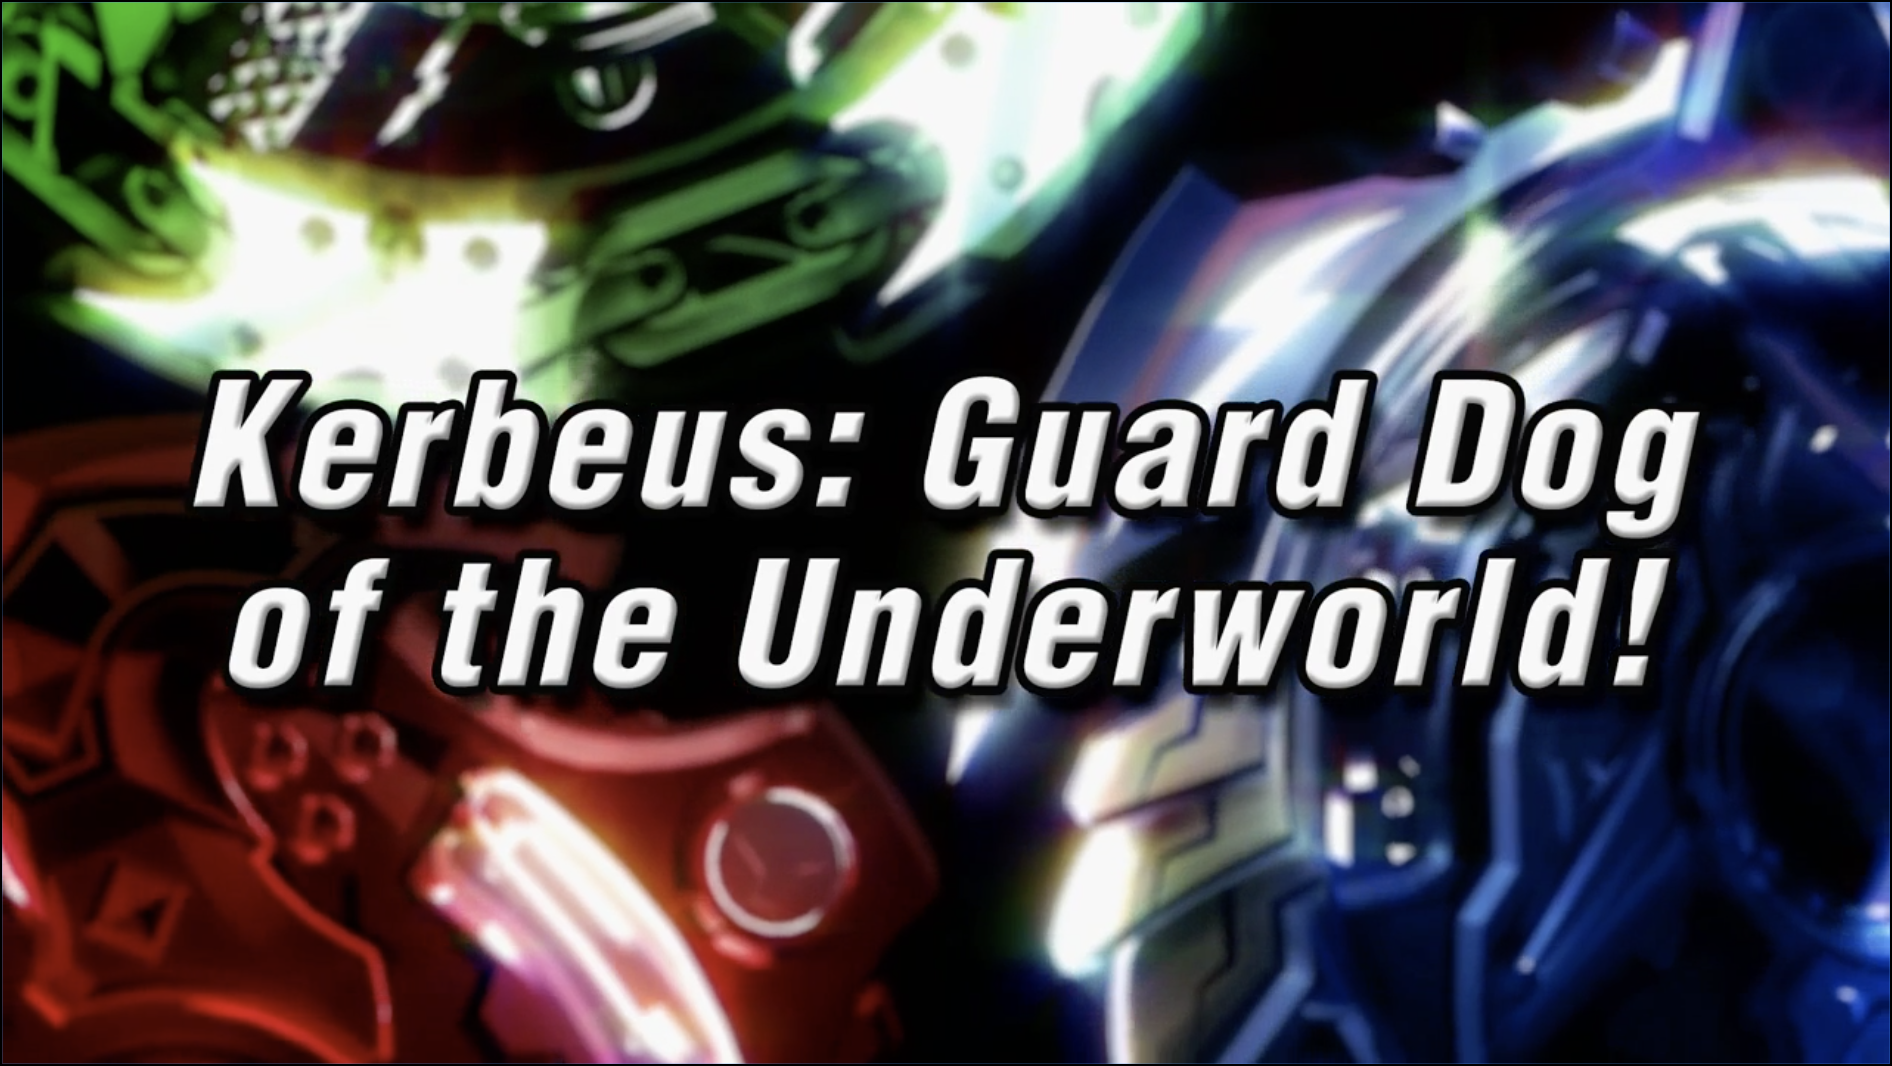 Kerbeus Guard Dog Of The Underworld, beyblade Burst App, quetzalcoatl,  beyblade Burst, spinning Tops, Beyblade, Excalibur, Valkyrie, wikia, wiki